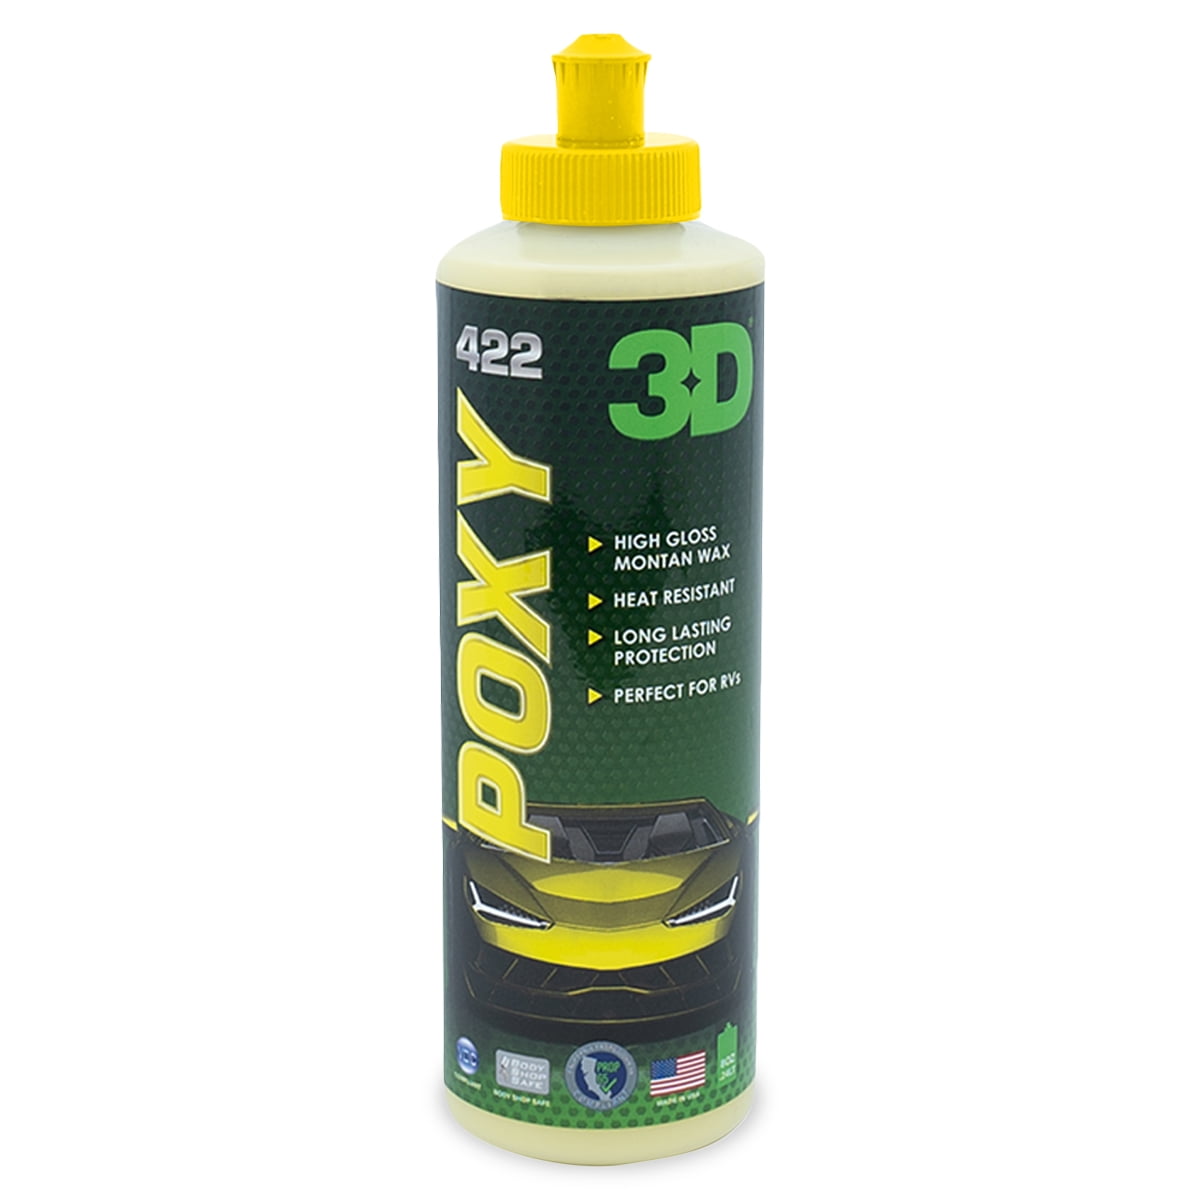 Goo Gone Citrus Solvent Automotive Cleaner Removes Sticker Gum Glue 3oz 